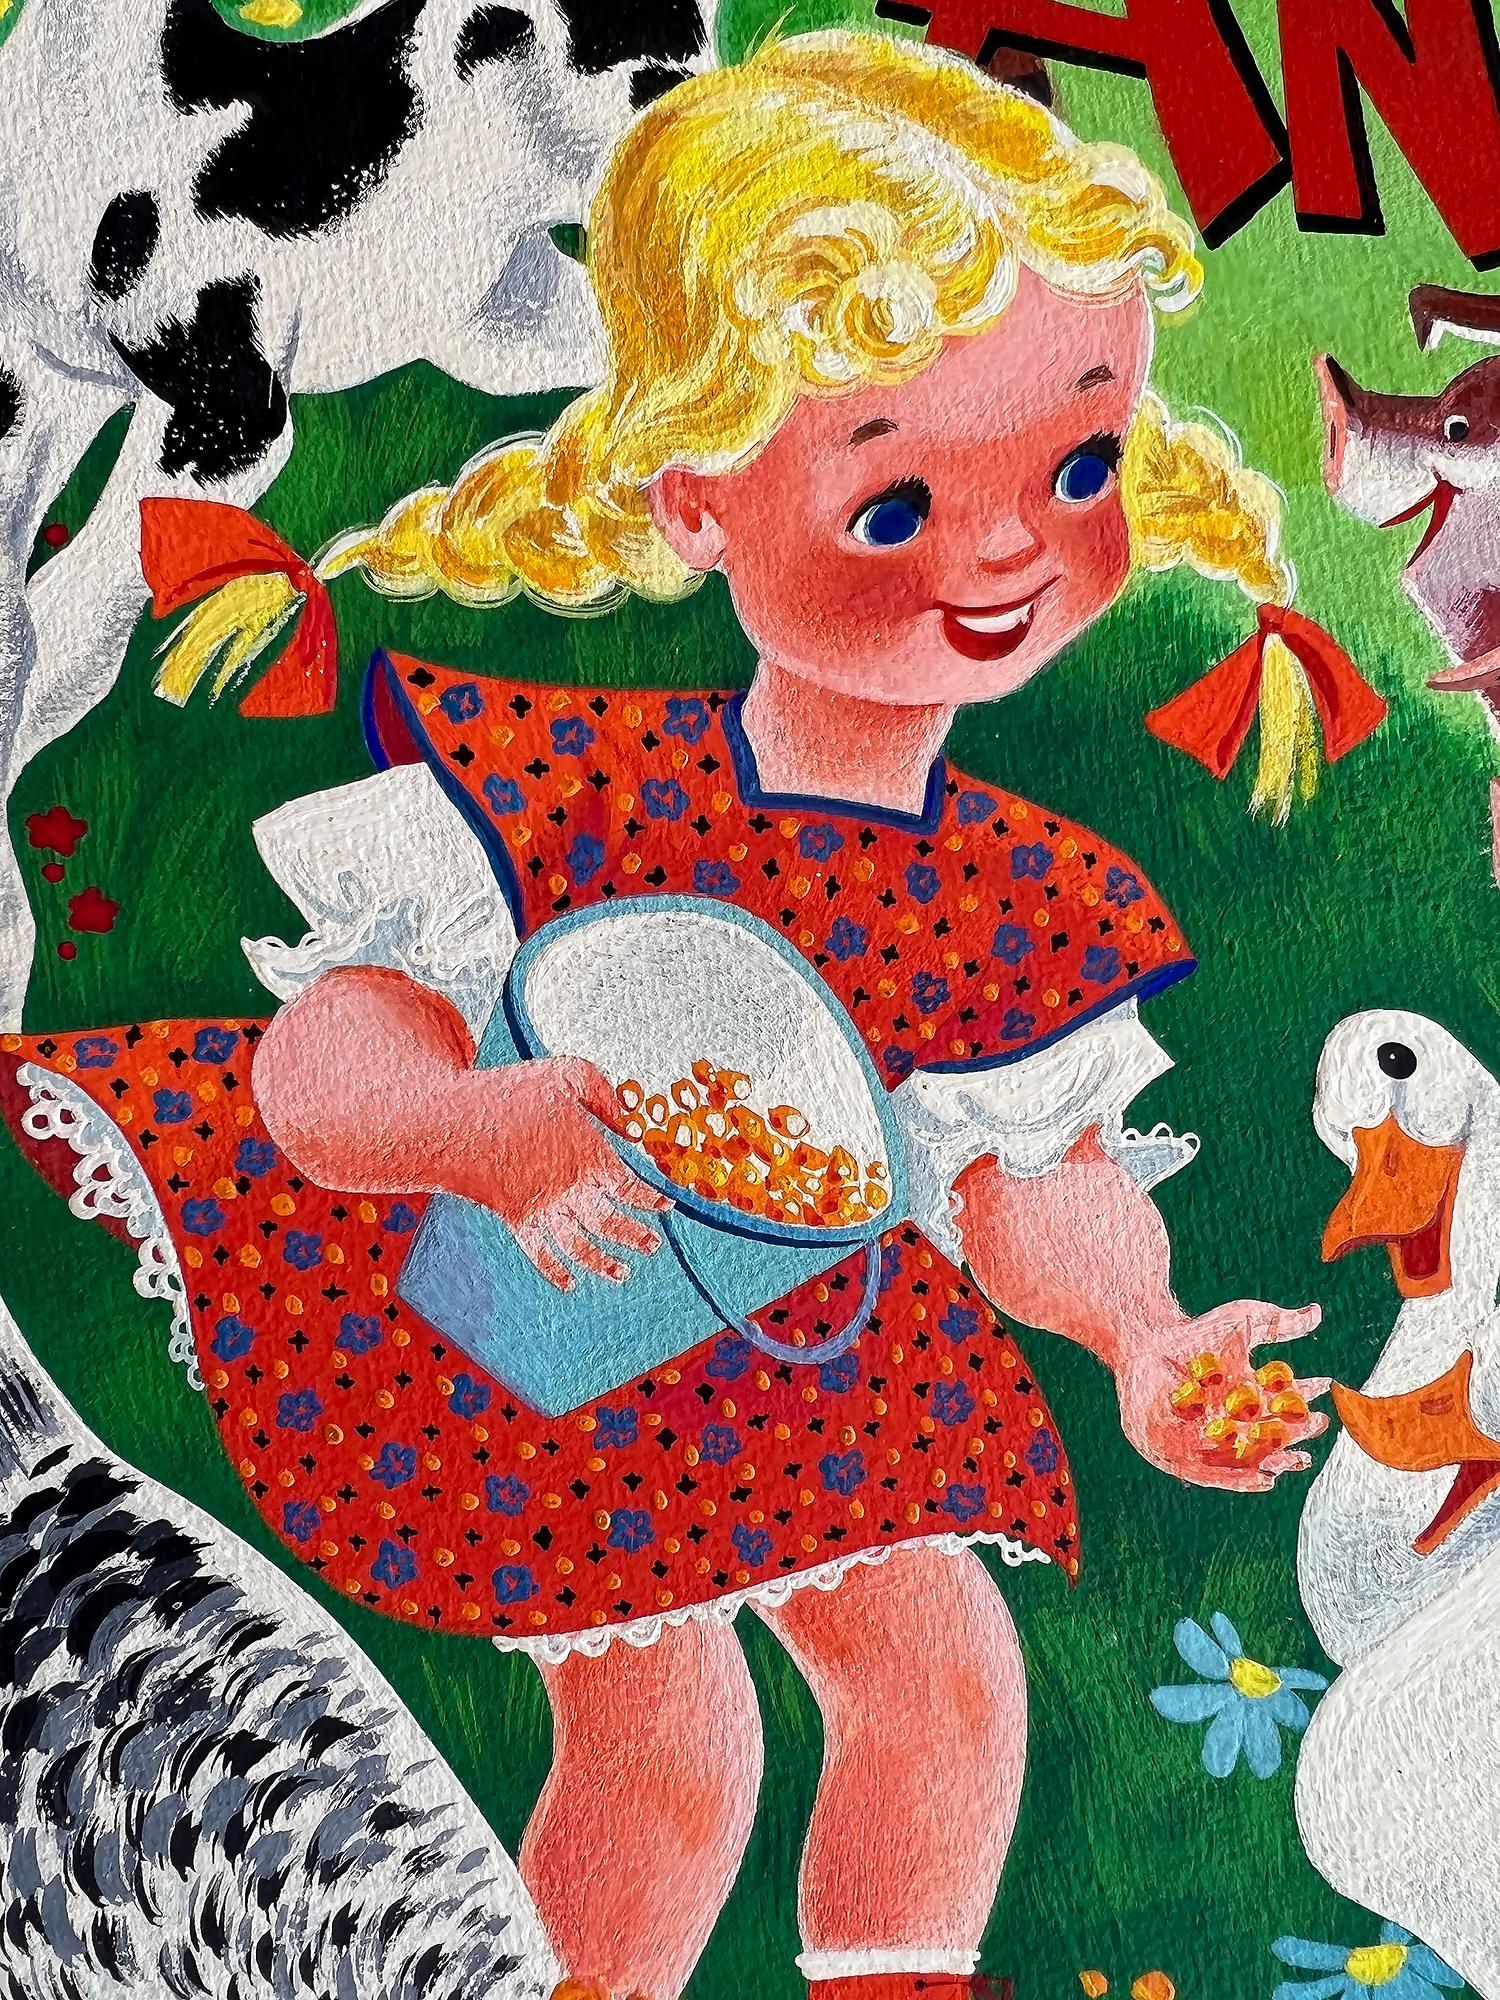 Horses, Chicken, Ducks, Rooster and  Pigs - Children's Book -Female Illustrator  - Painting by Retta Scott